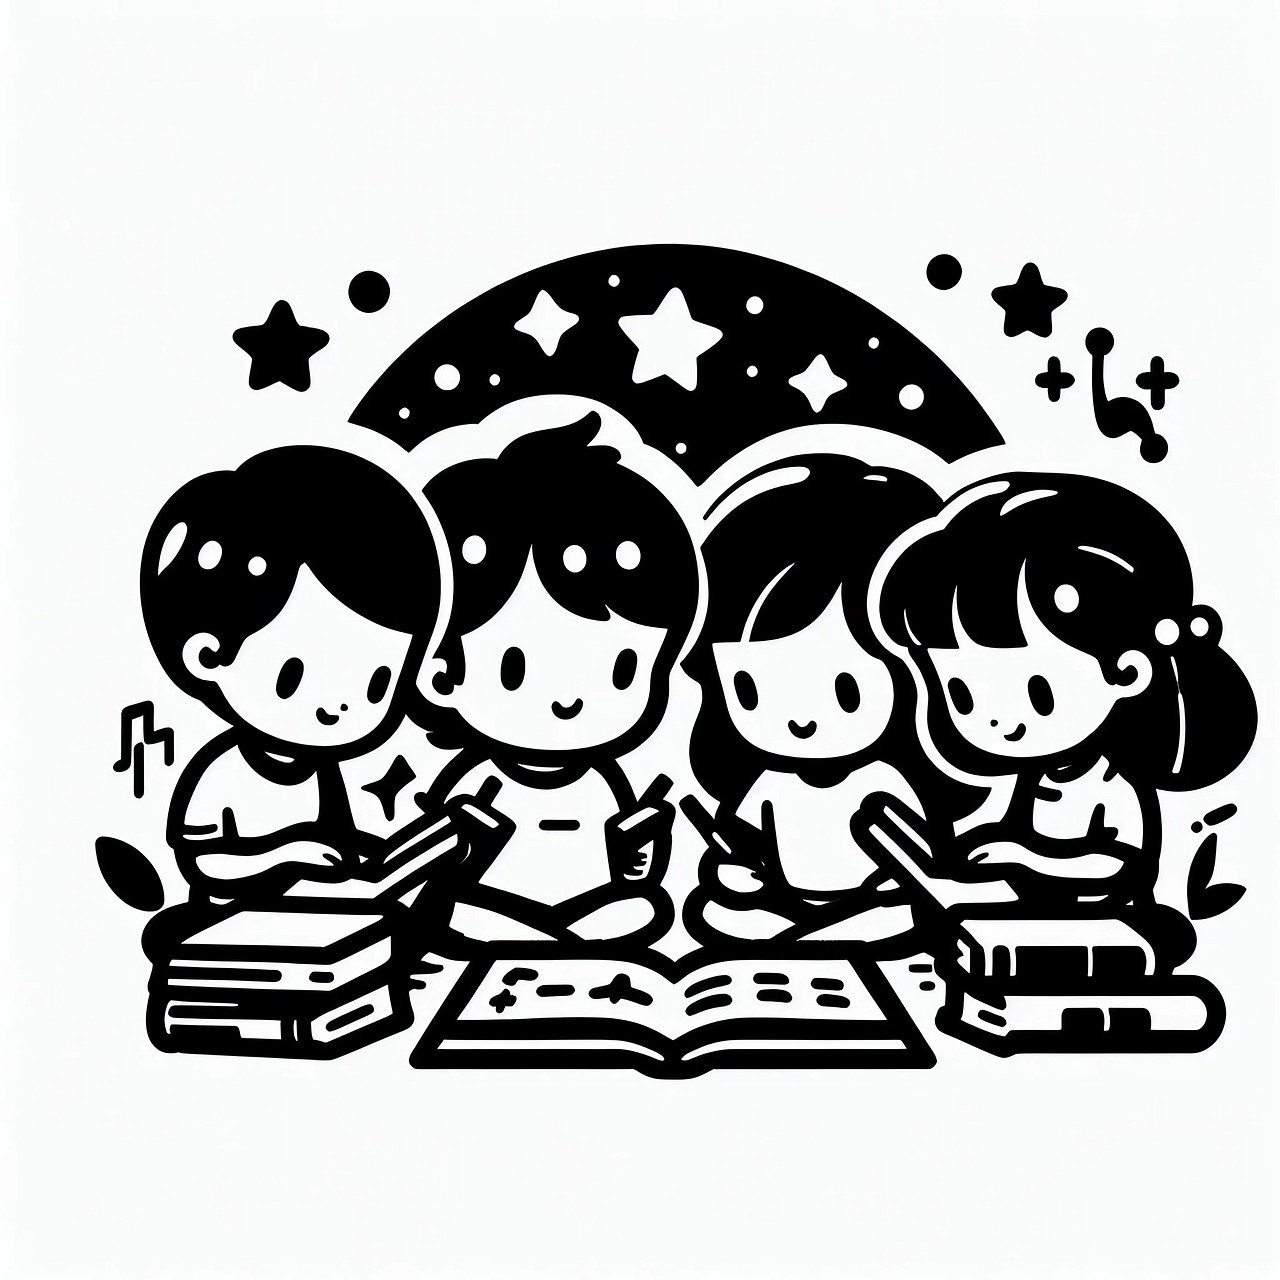 Amrita-art. (2023). Kids group learning reading study [Photograph]. Pixabay. https://pixabay.com/illustrations/kids-group-learning-reading-study-8316102/